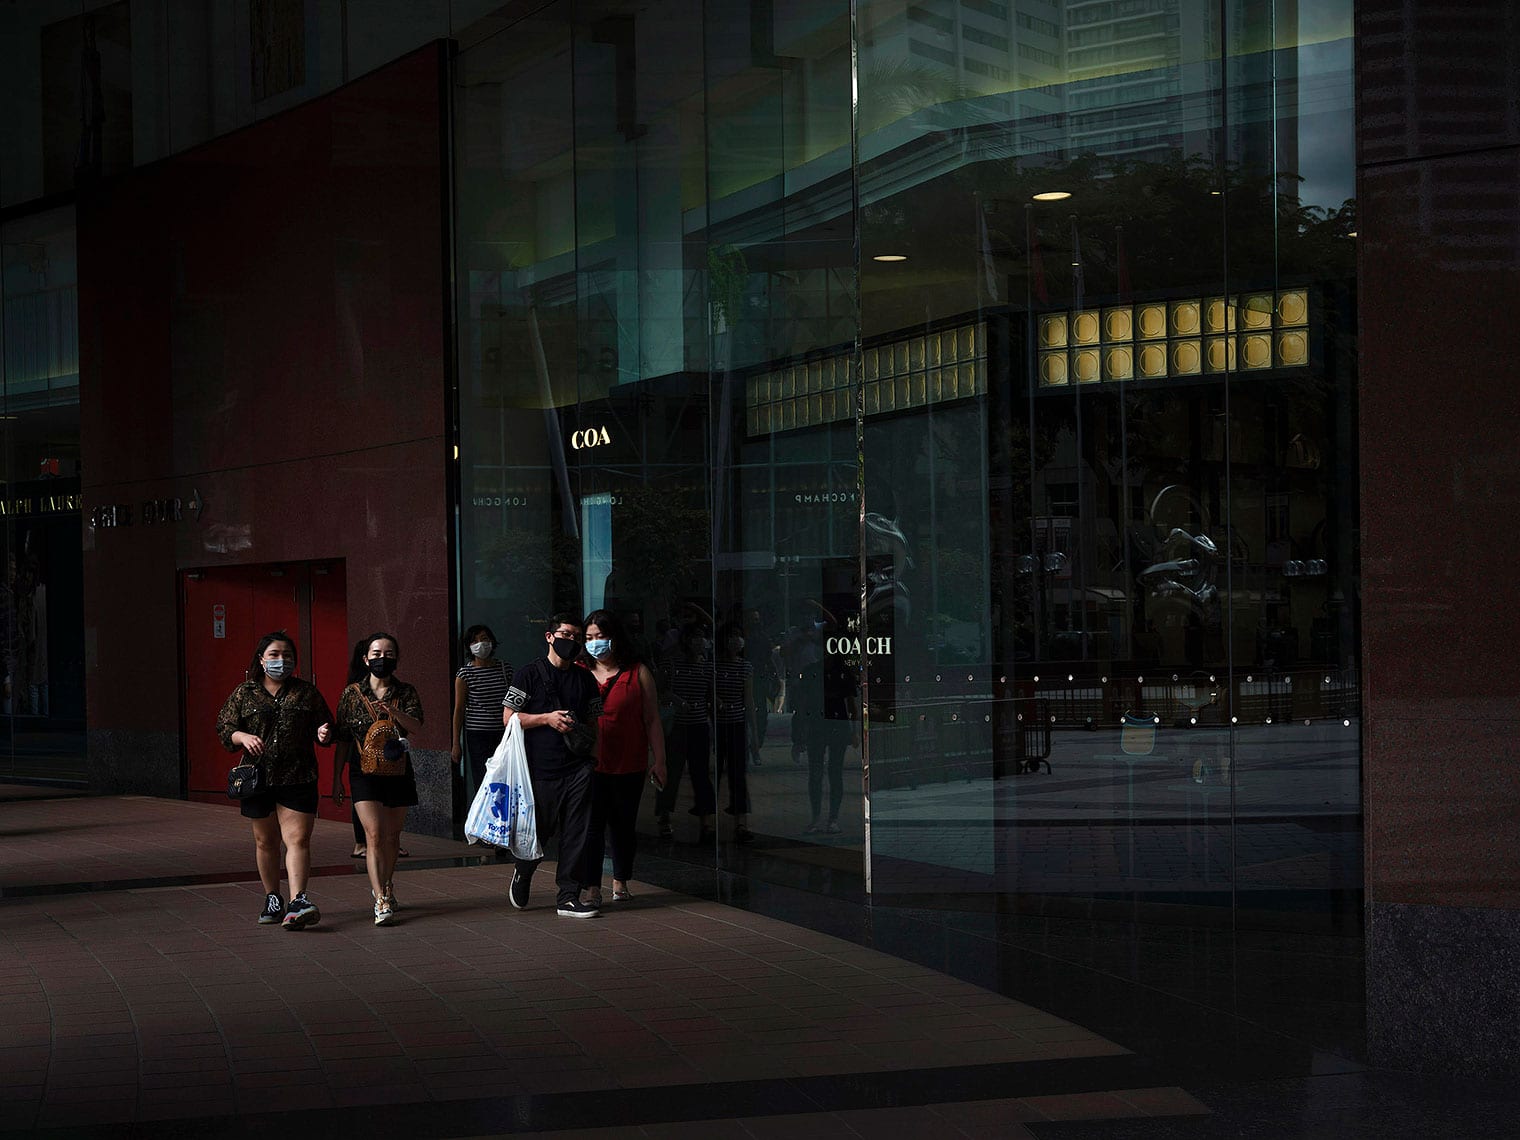 Masked shoppers walk along a darkened street beside a glass "Coach" shop window